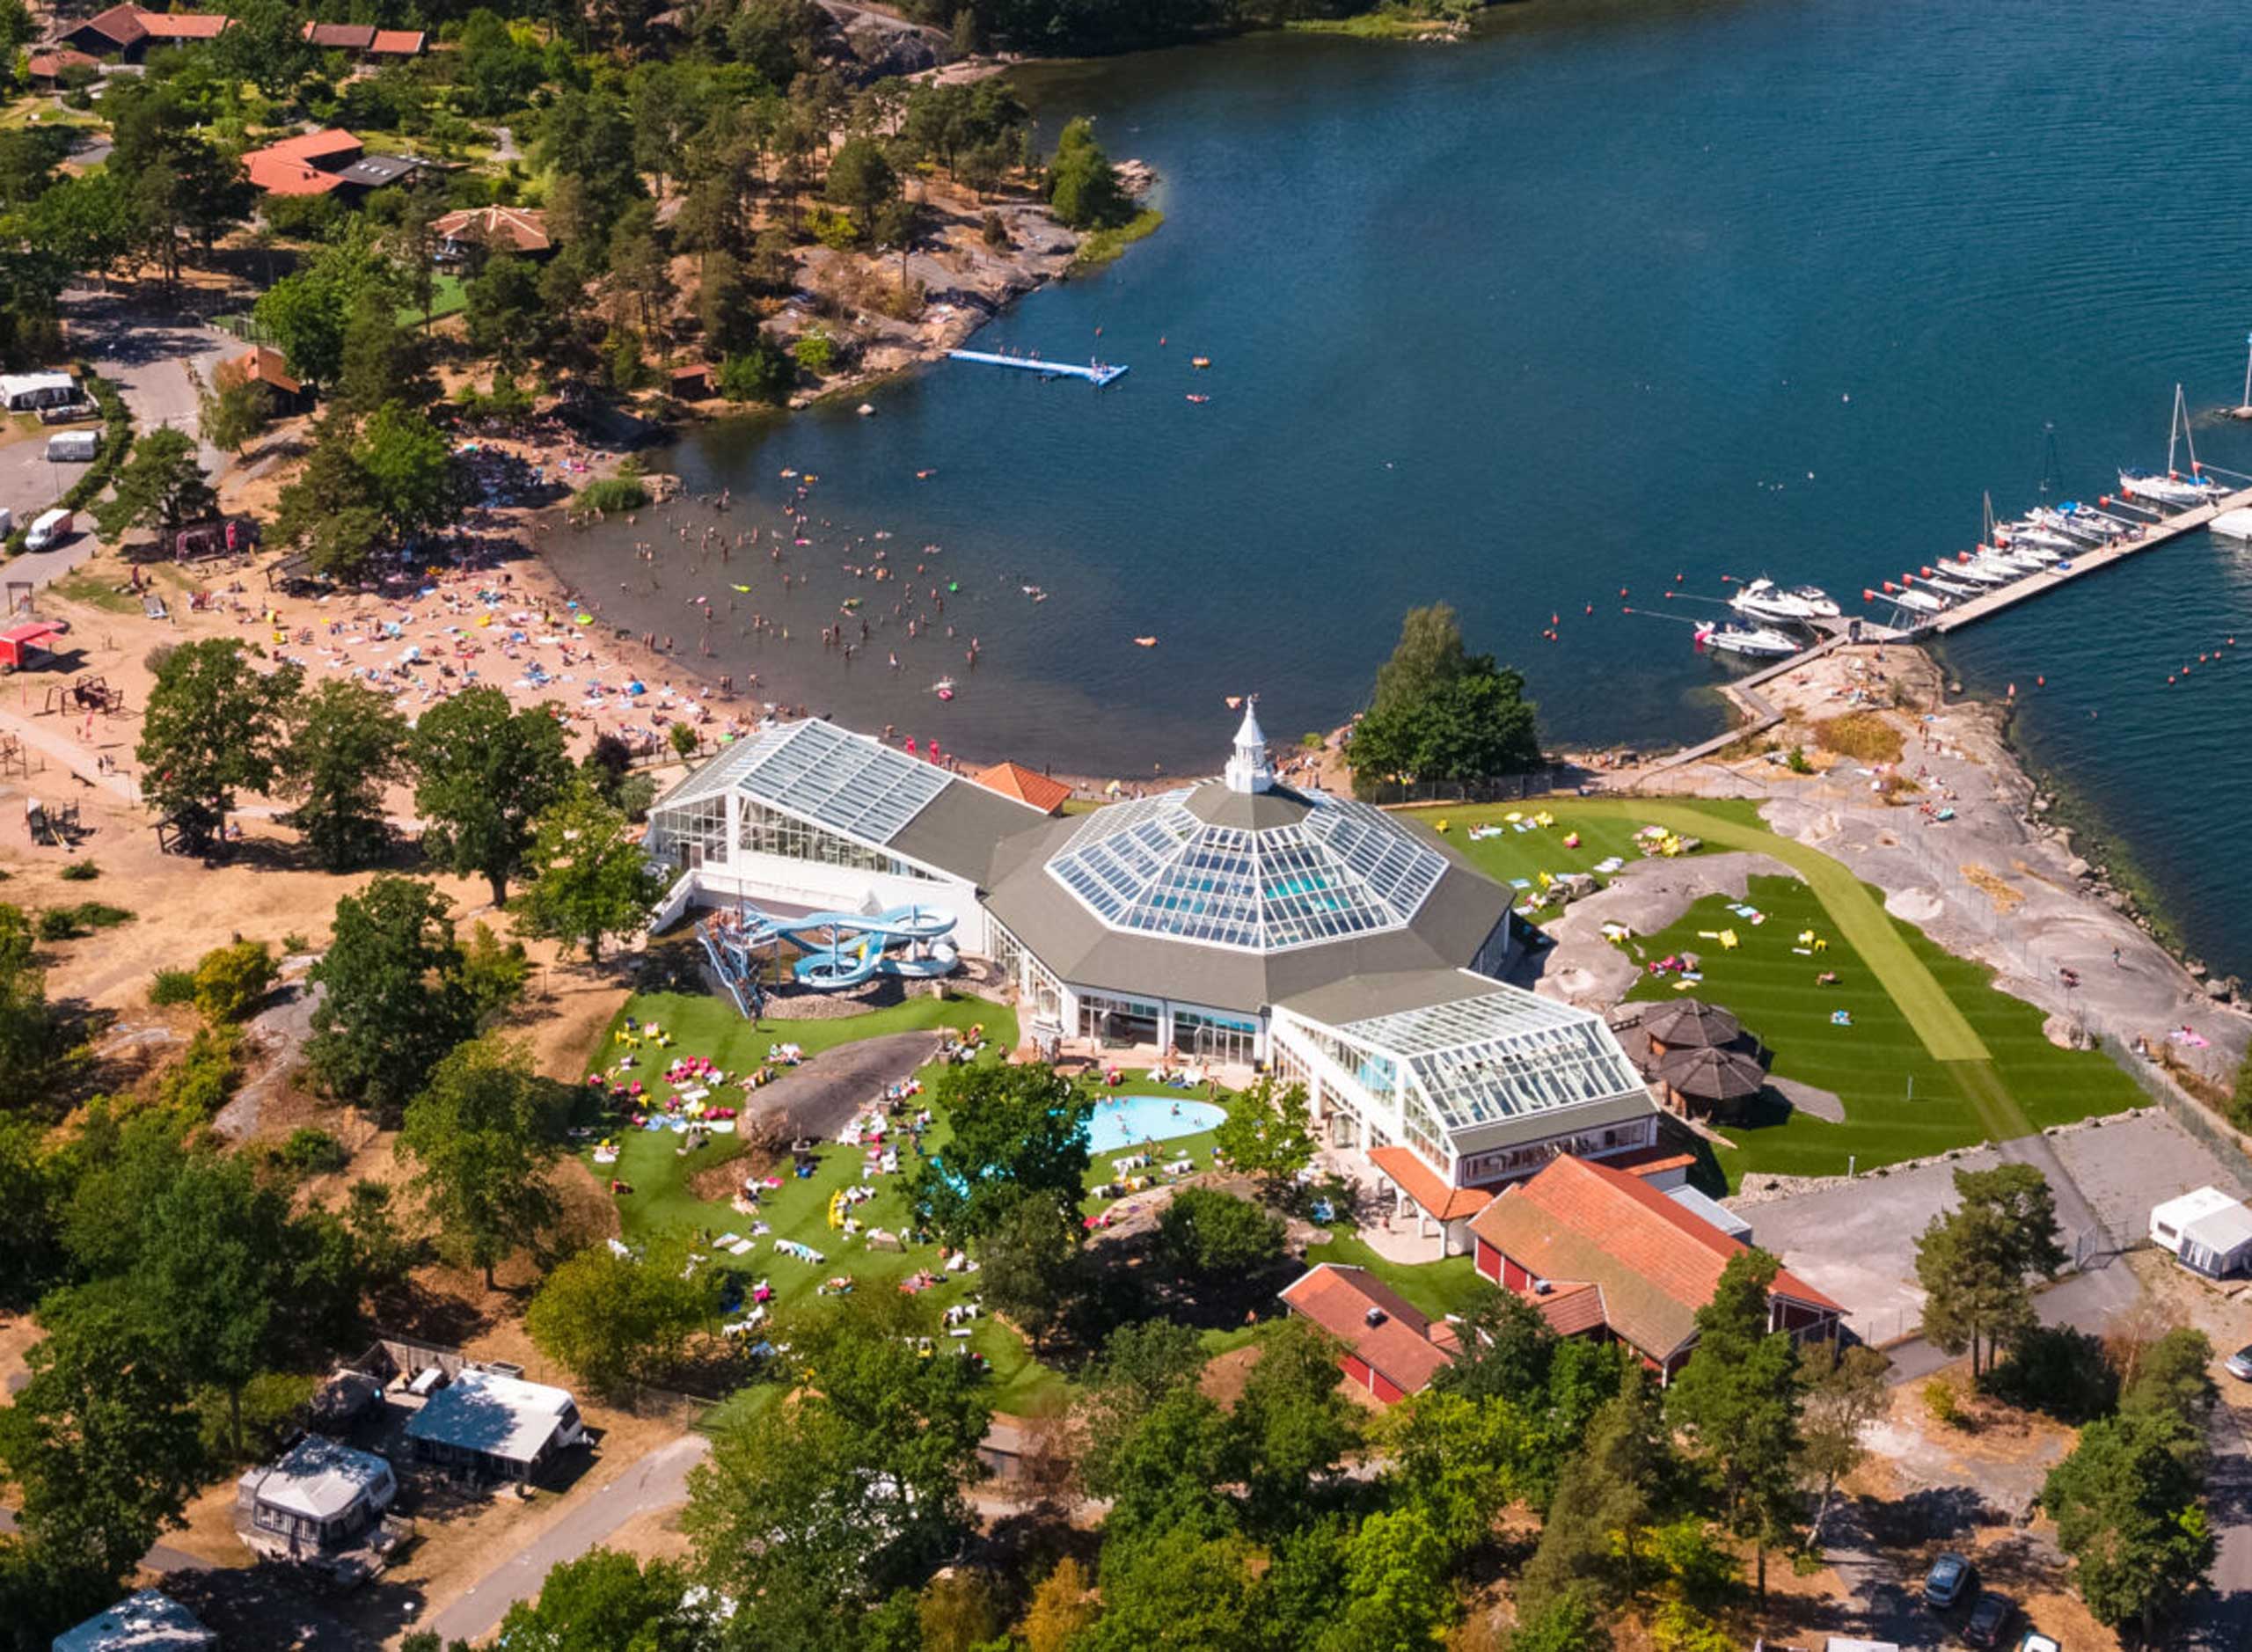 Västervik Resort offers lots of activities, for adults and children alike. Copyright: Västervik Resort